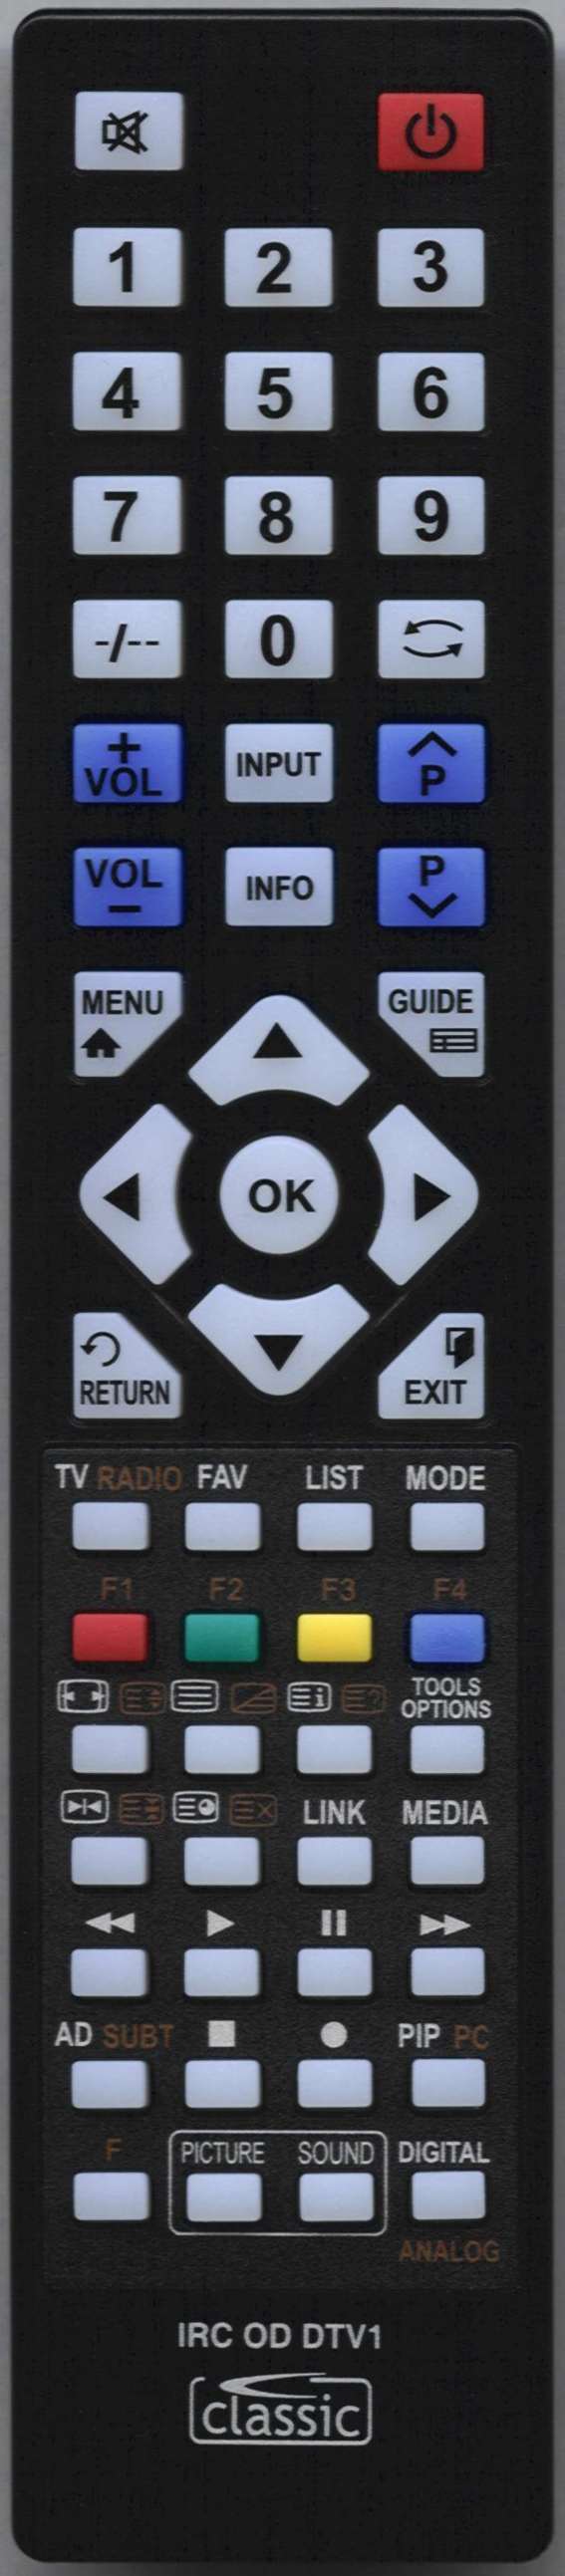 LG 86SM9000 Remote Control Alternative